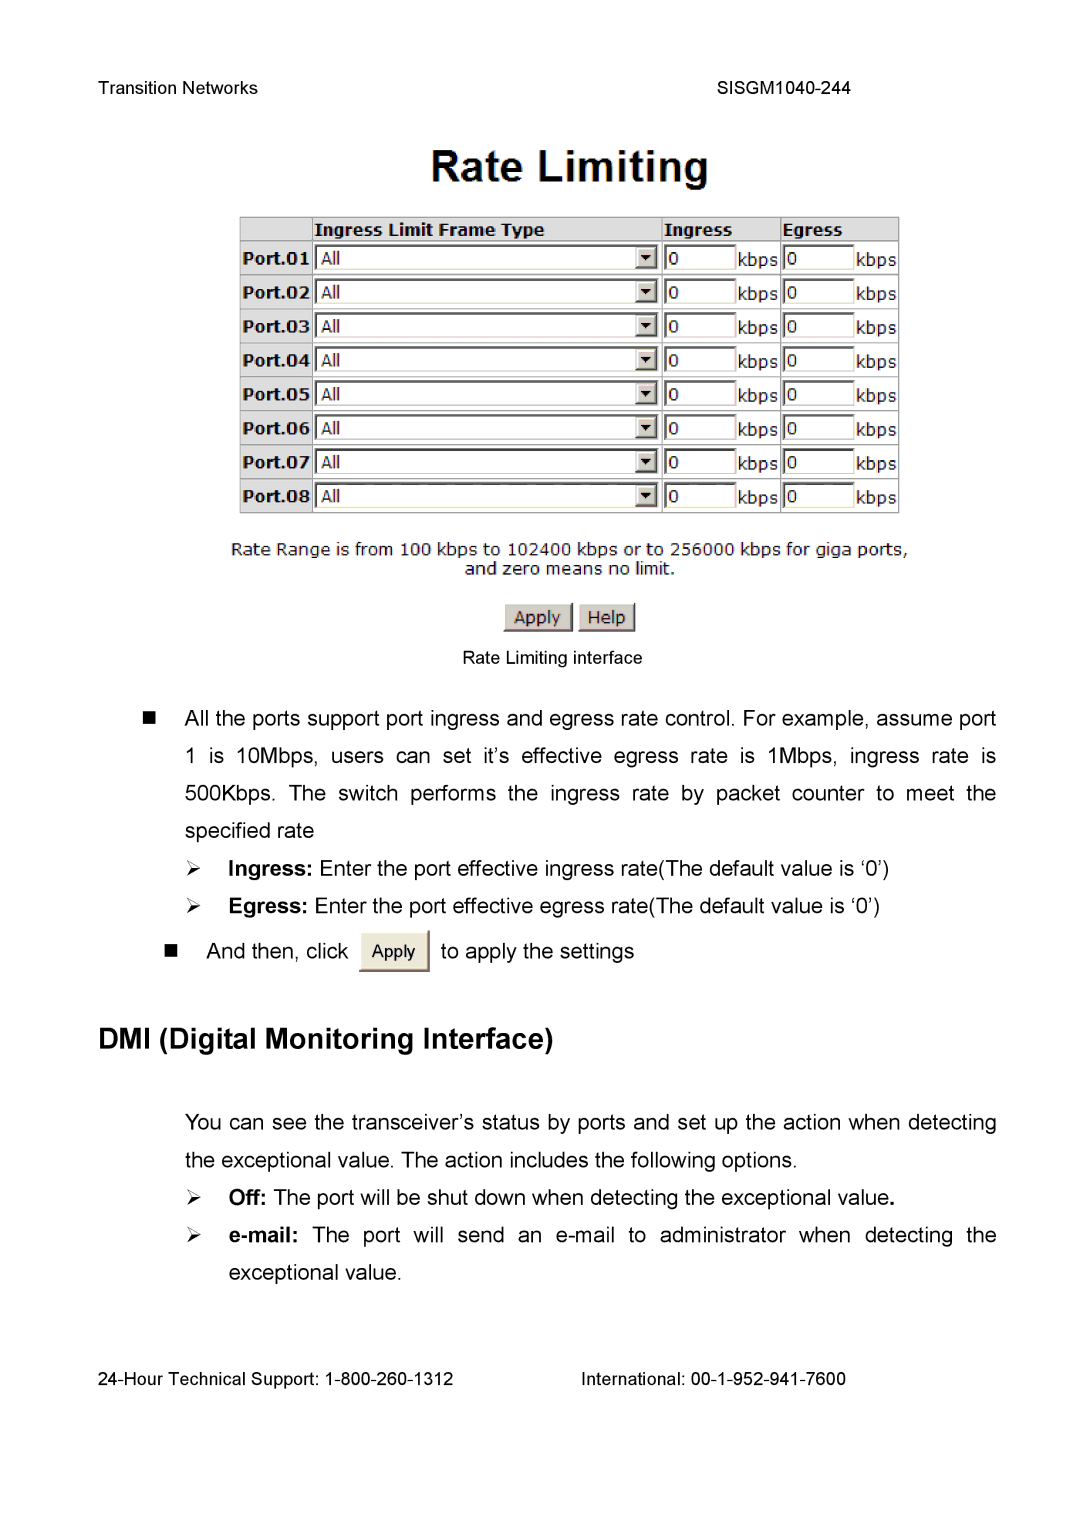 Transition Networks SISGM1040-244 user manual DMI Digital Monitoring Interface 